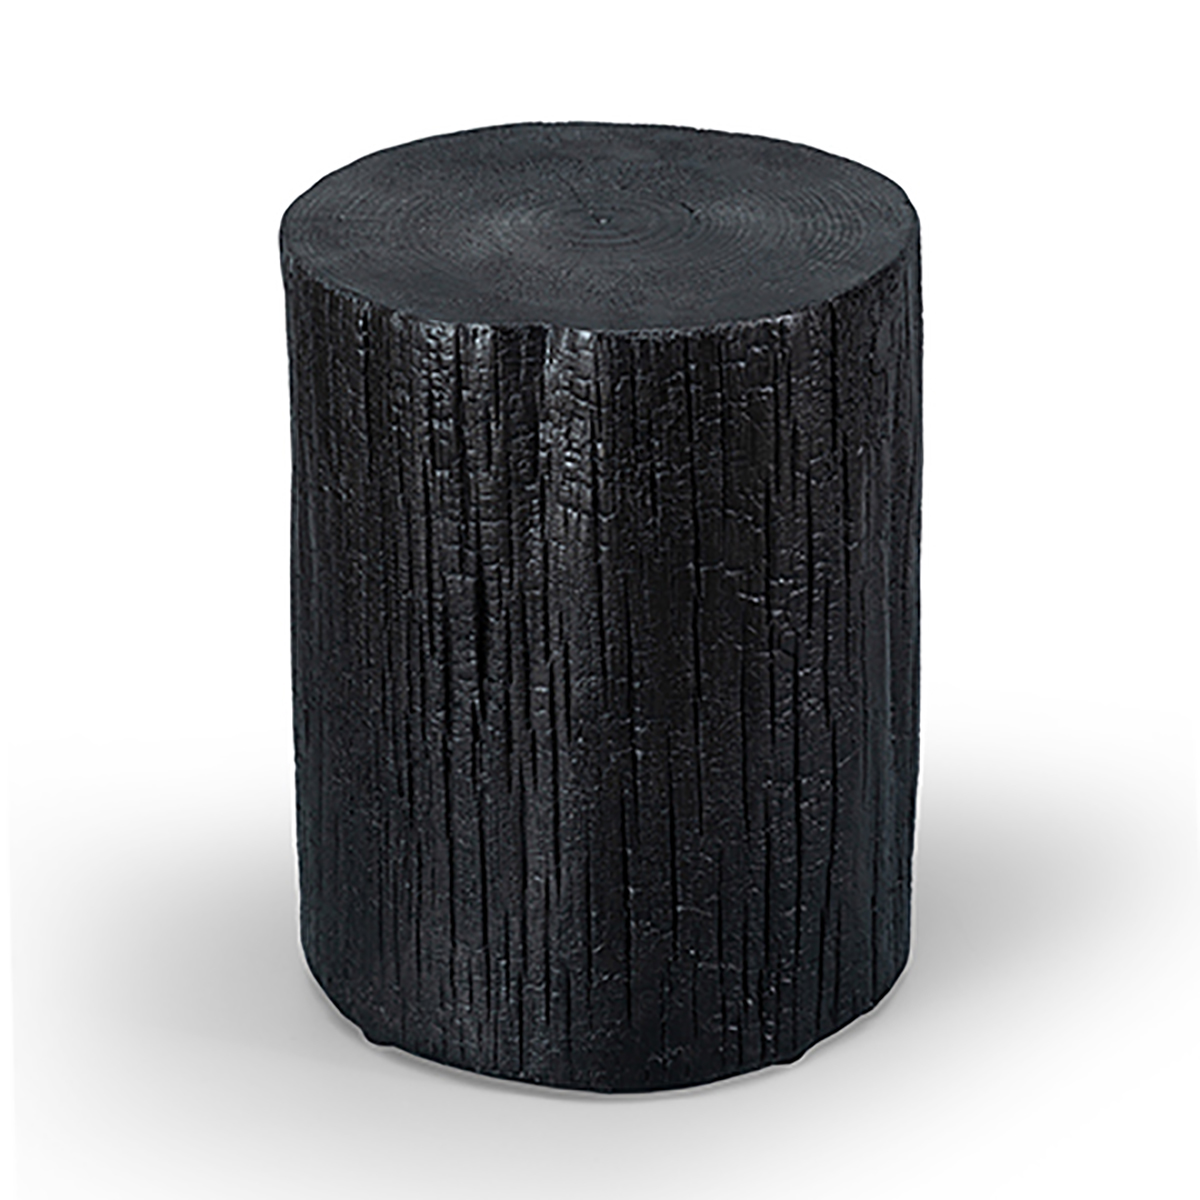 Mesa de acento de madera de caracol Faux en muebles negros